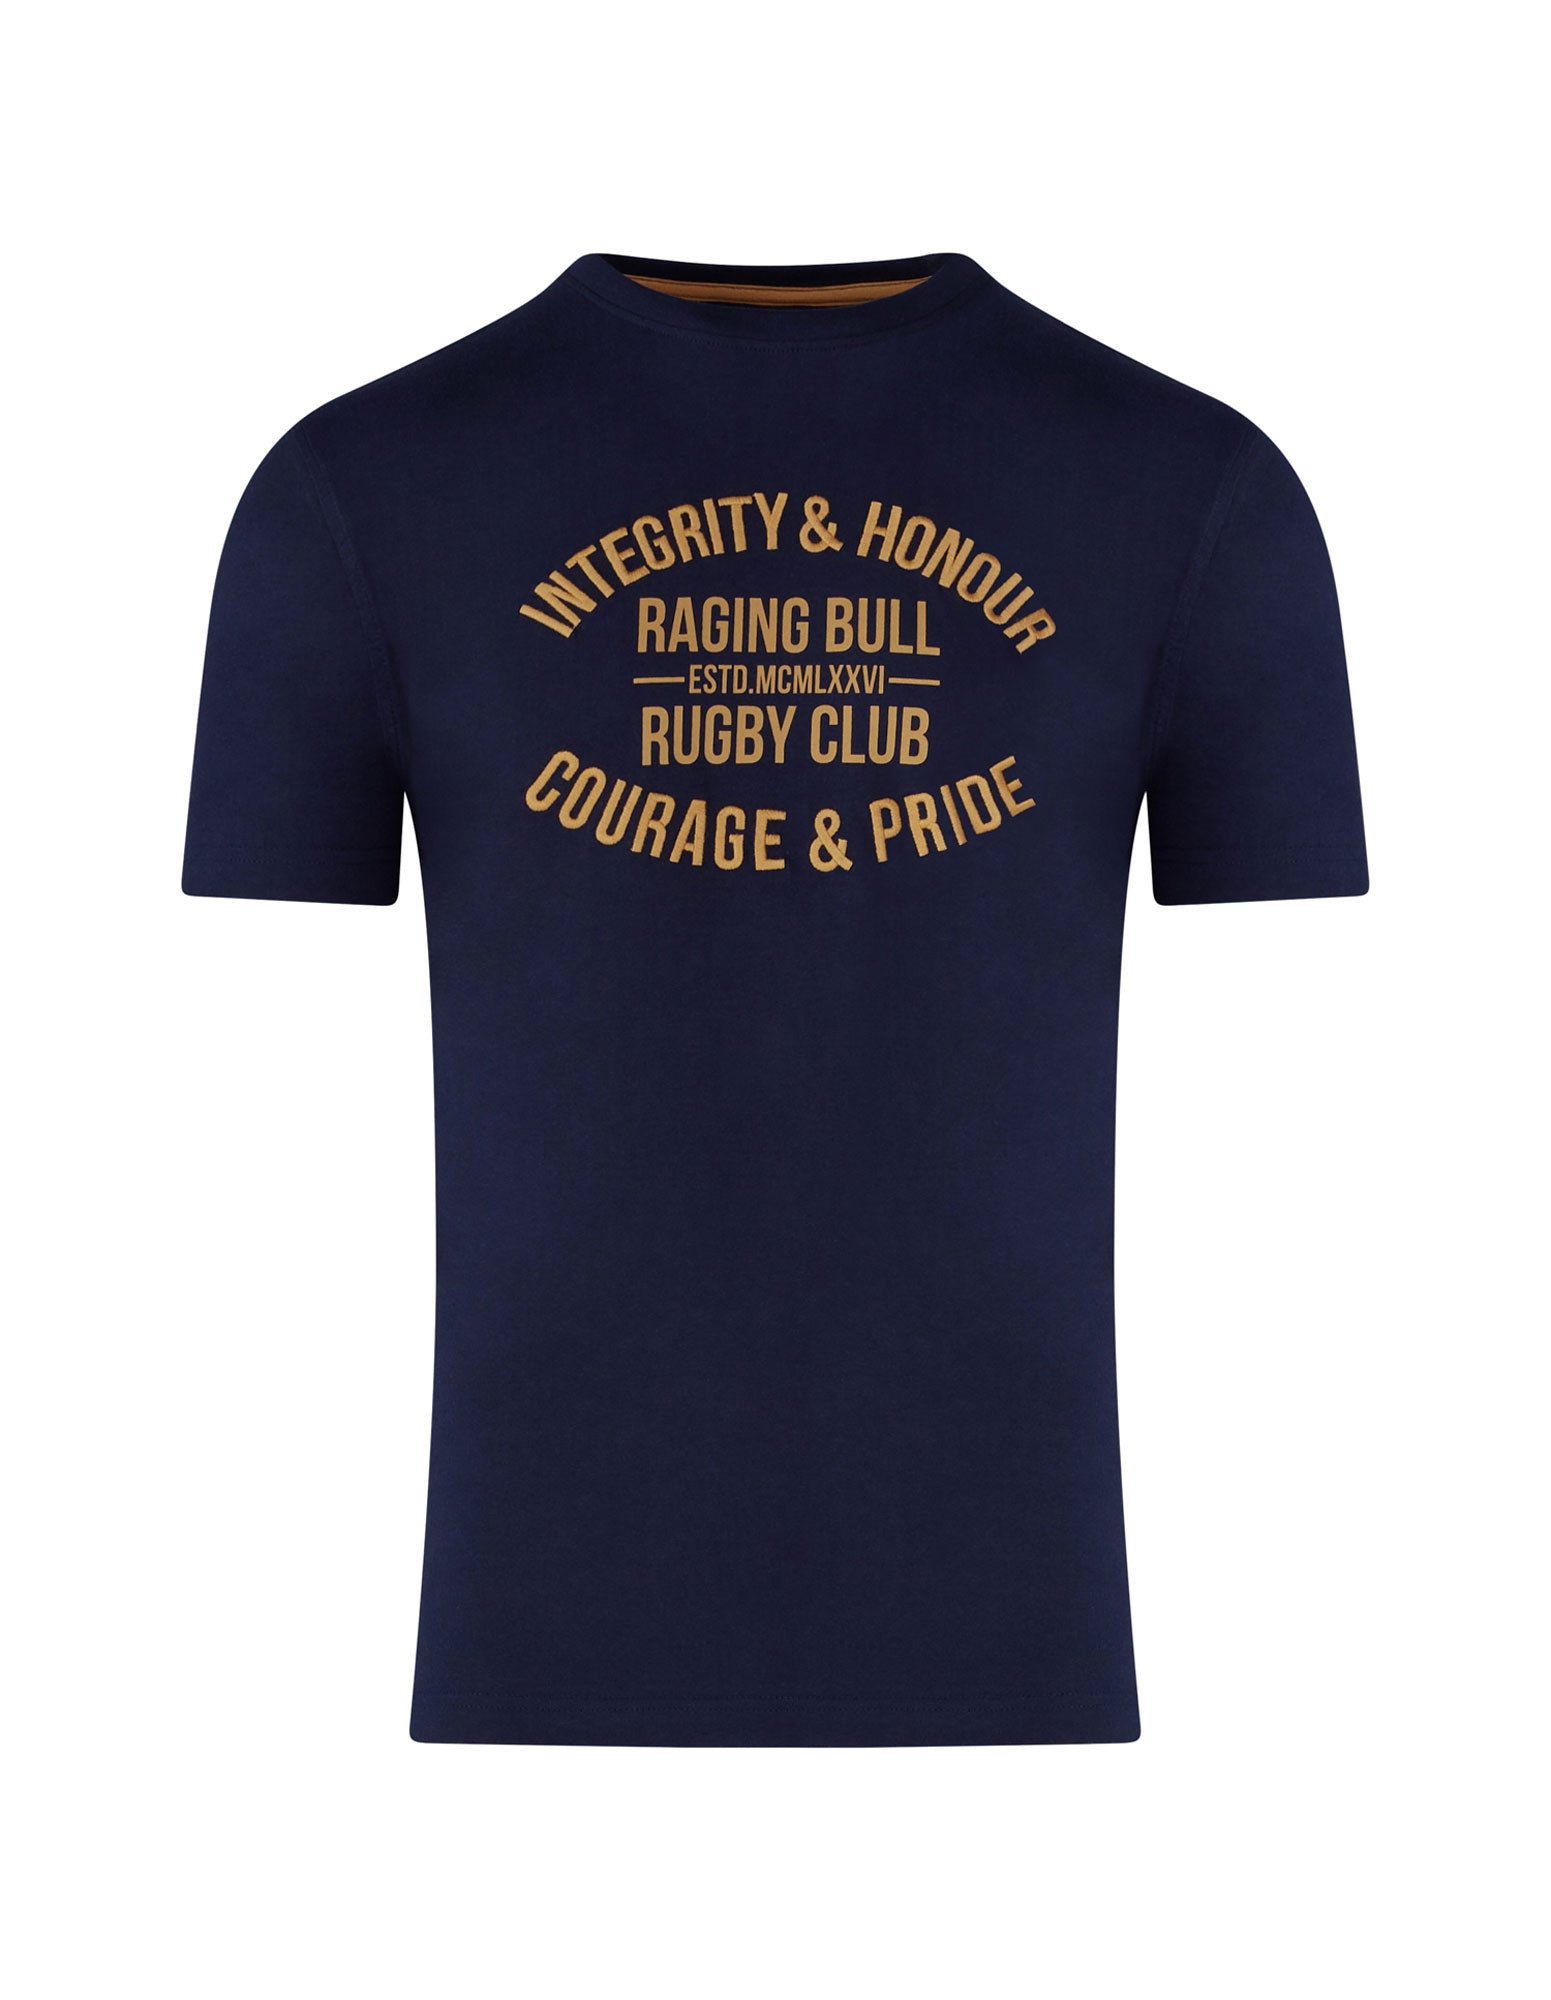 Courage & Pride T-Shirt - Navy